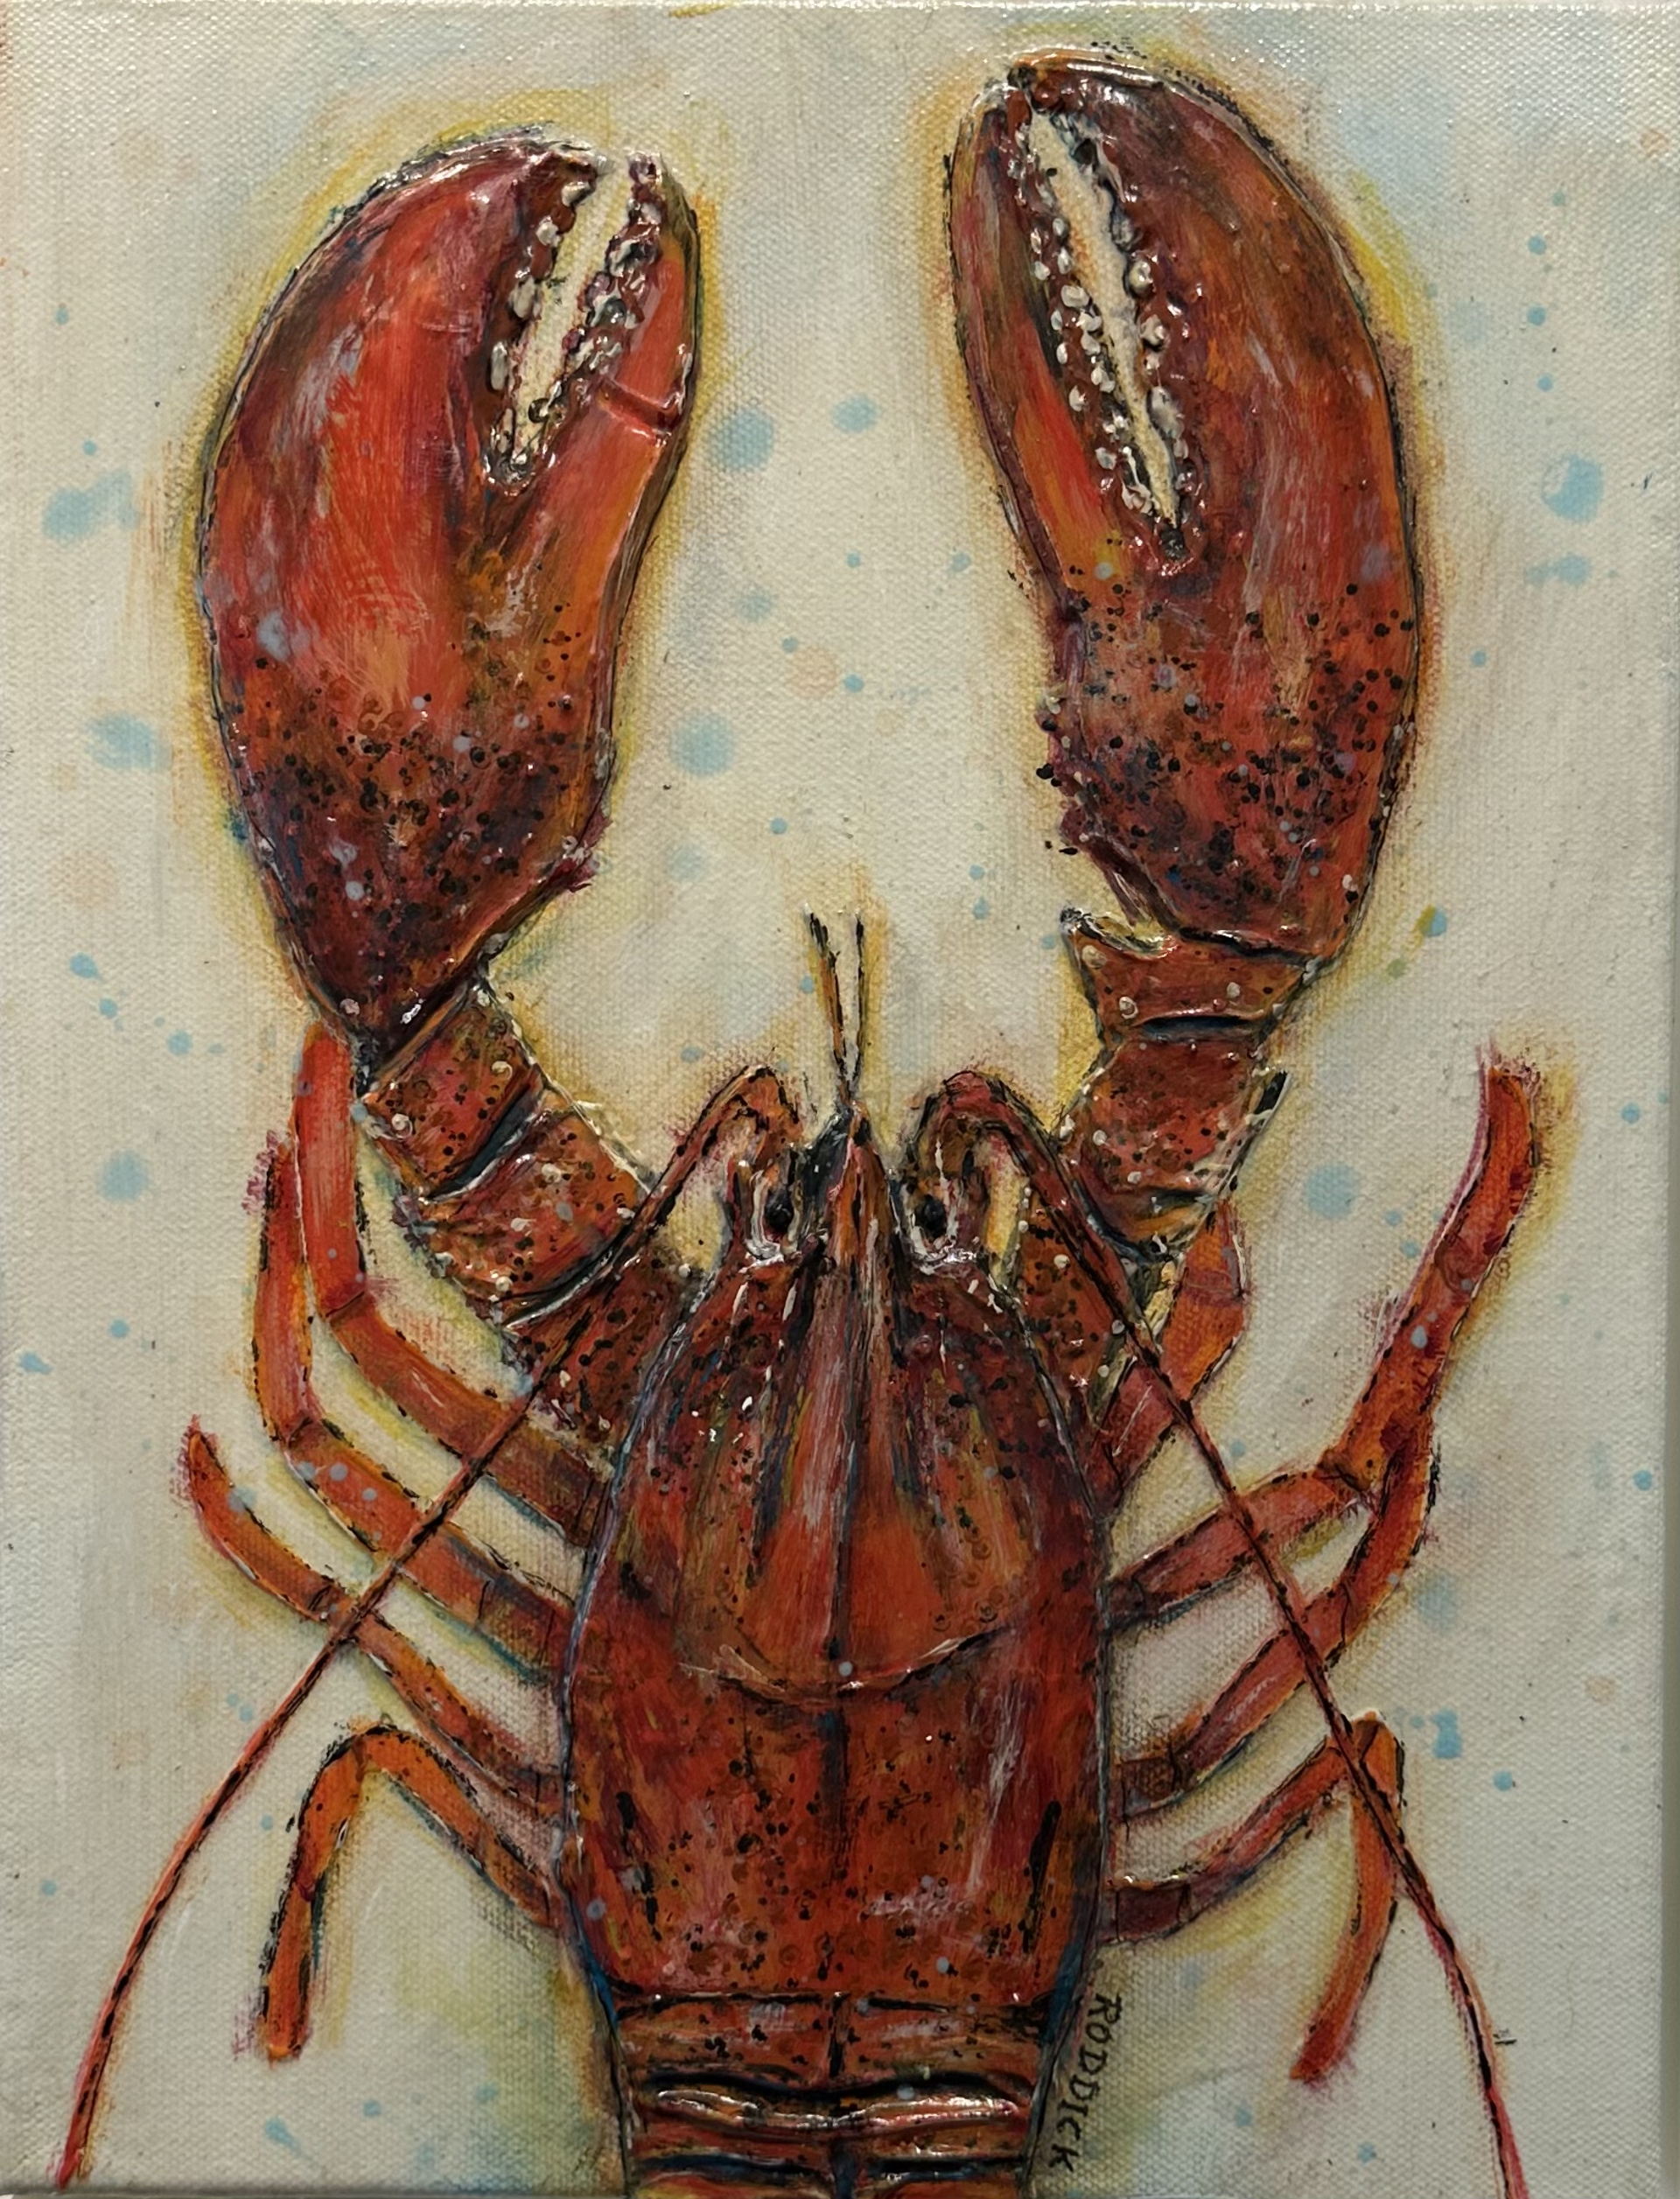 Lobster #2 by Christopher Roddick